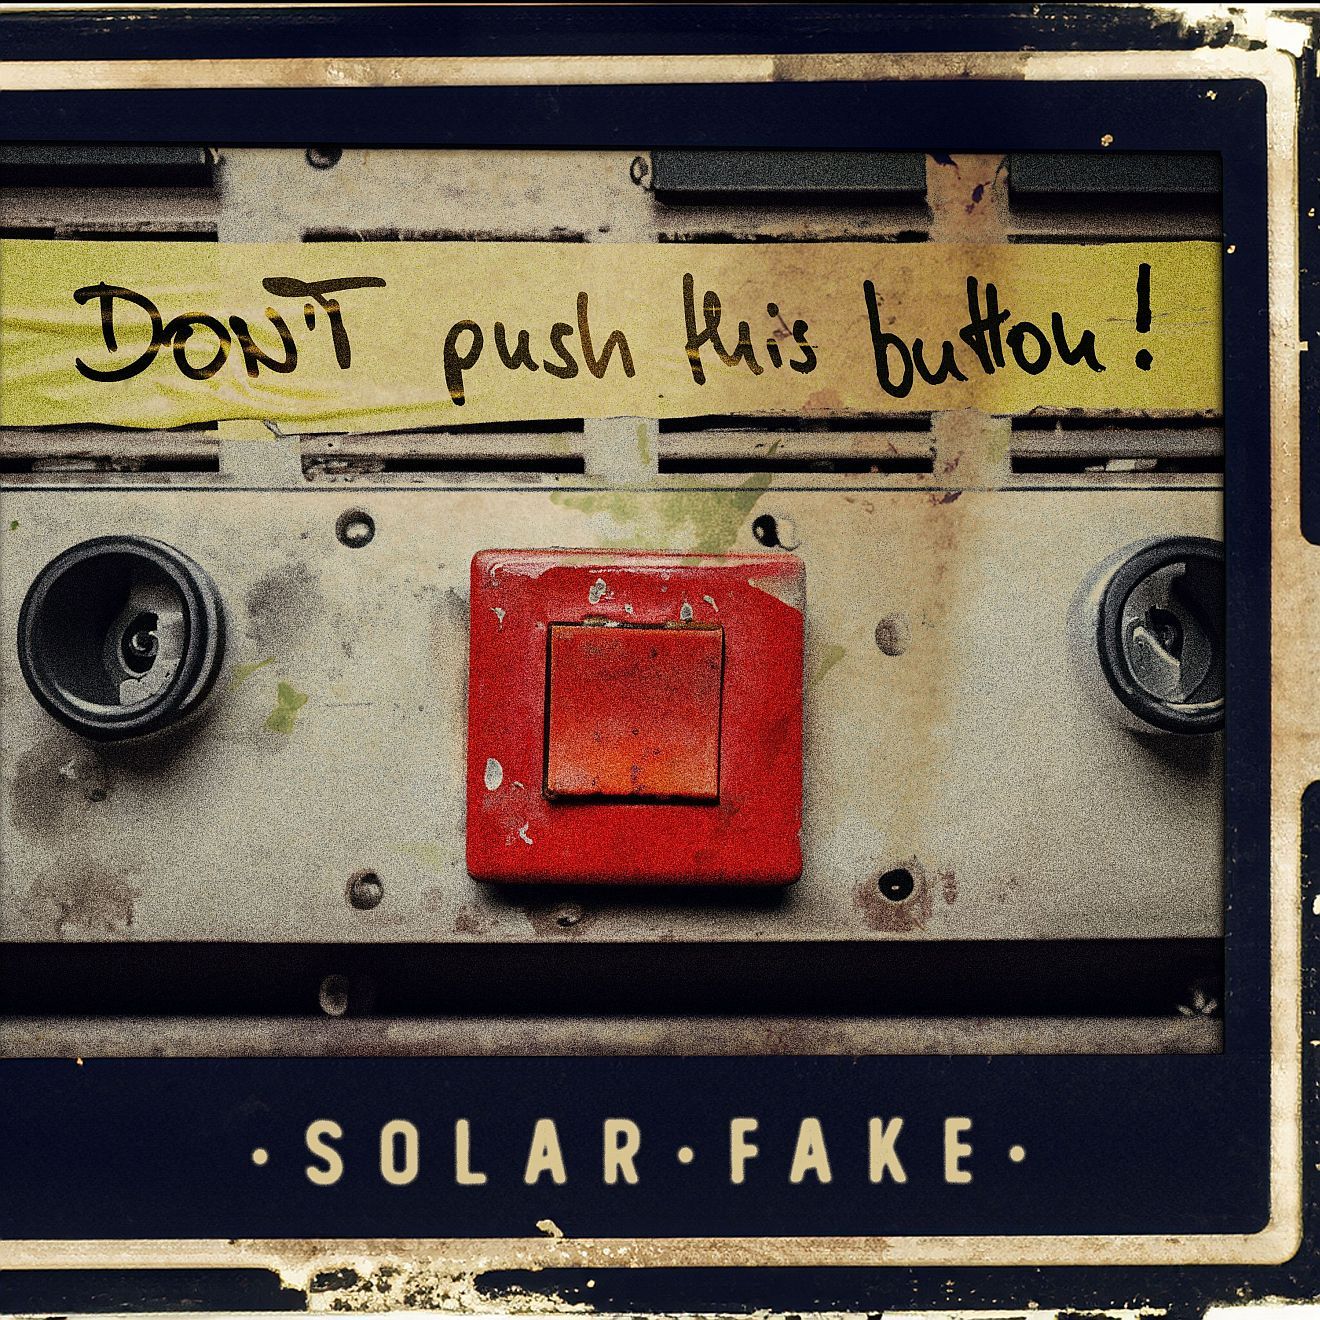 Solar Fake - Don’t push this button!